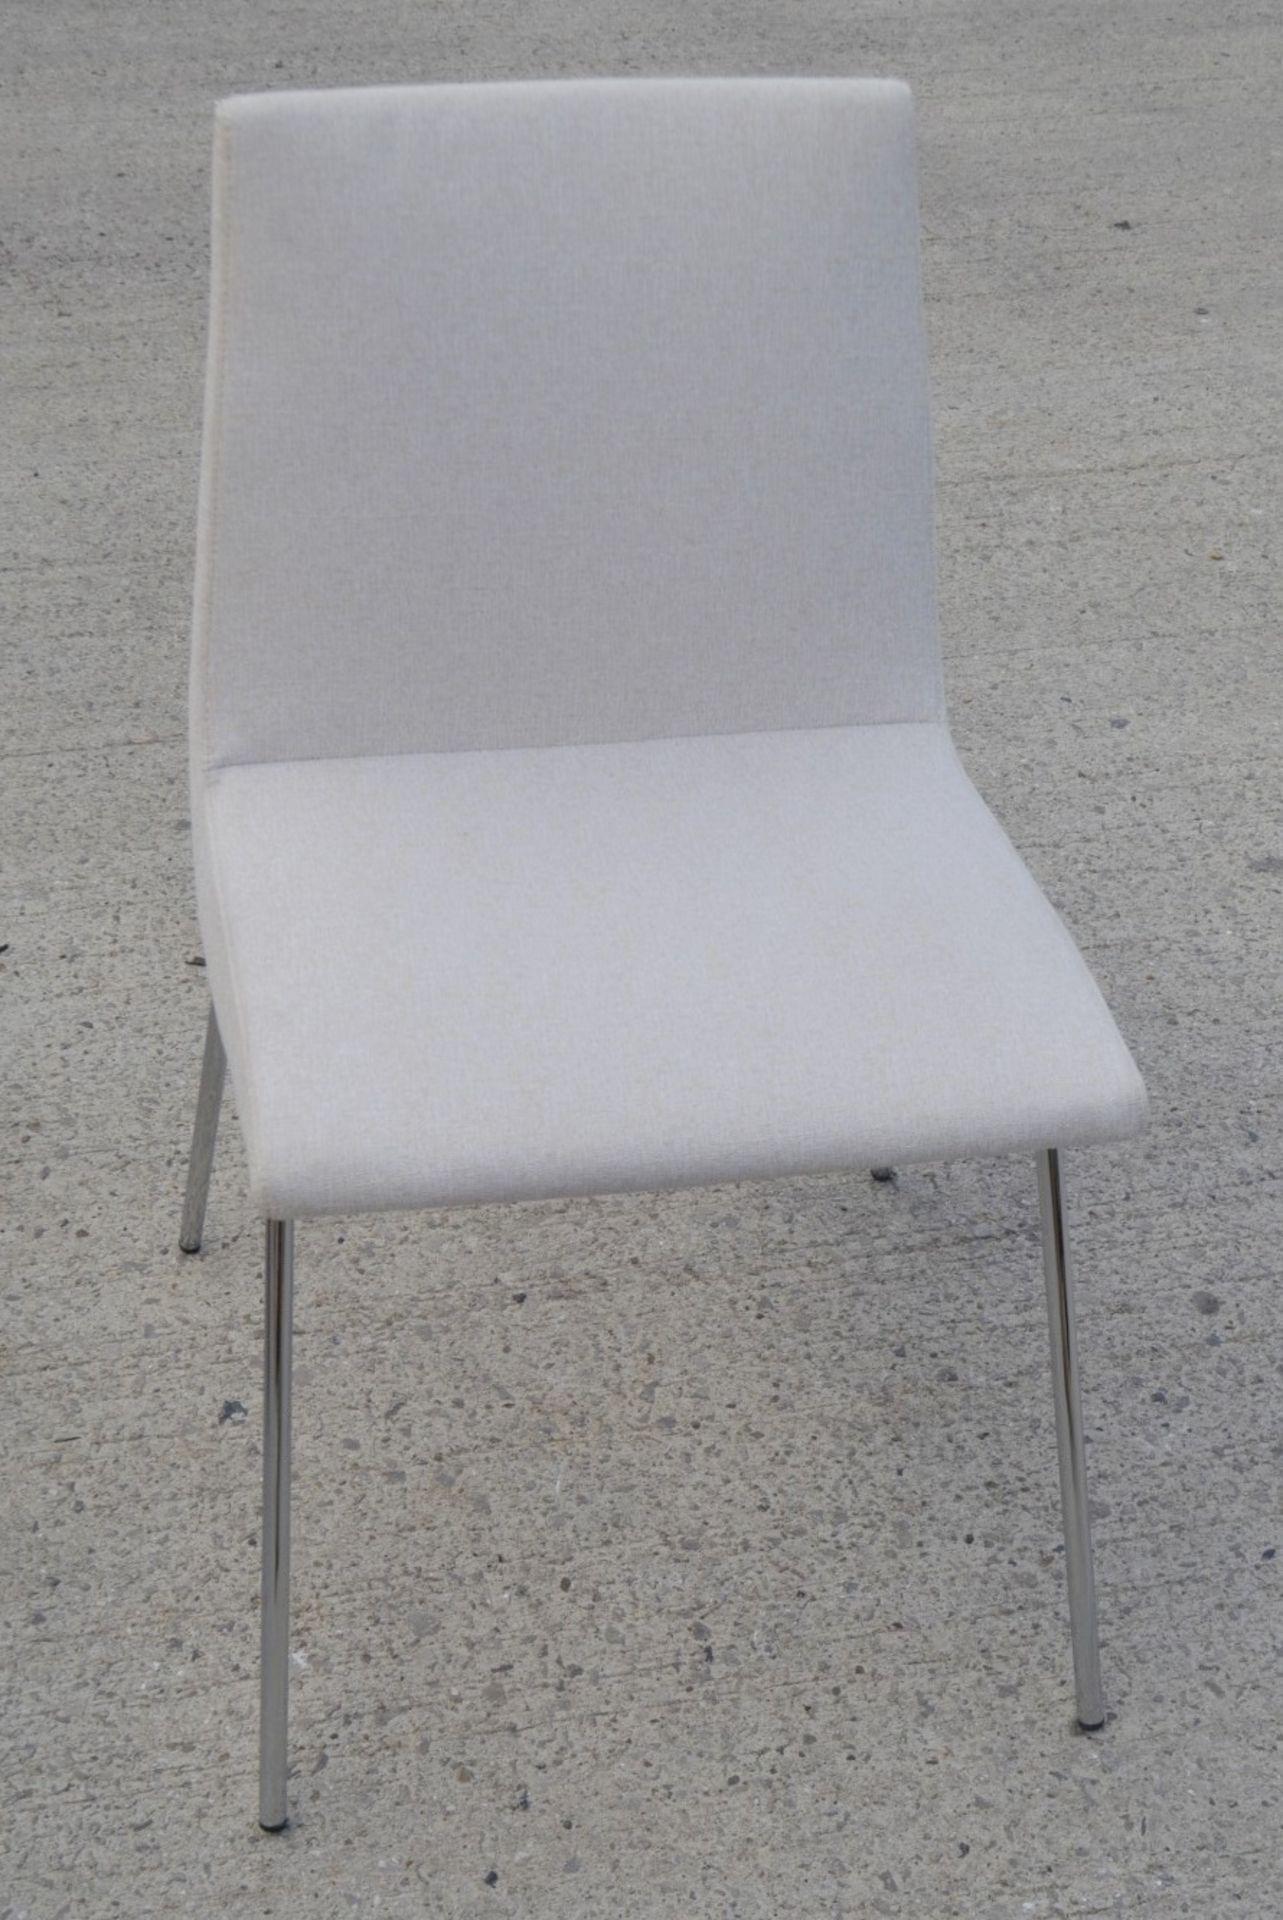 Pair Of LIGNE ROSET 'TV' Designer Dining Chairs In A Light Neutral Beige Fabric & Chromed Steel Legs - Image 3 of 9